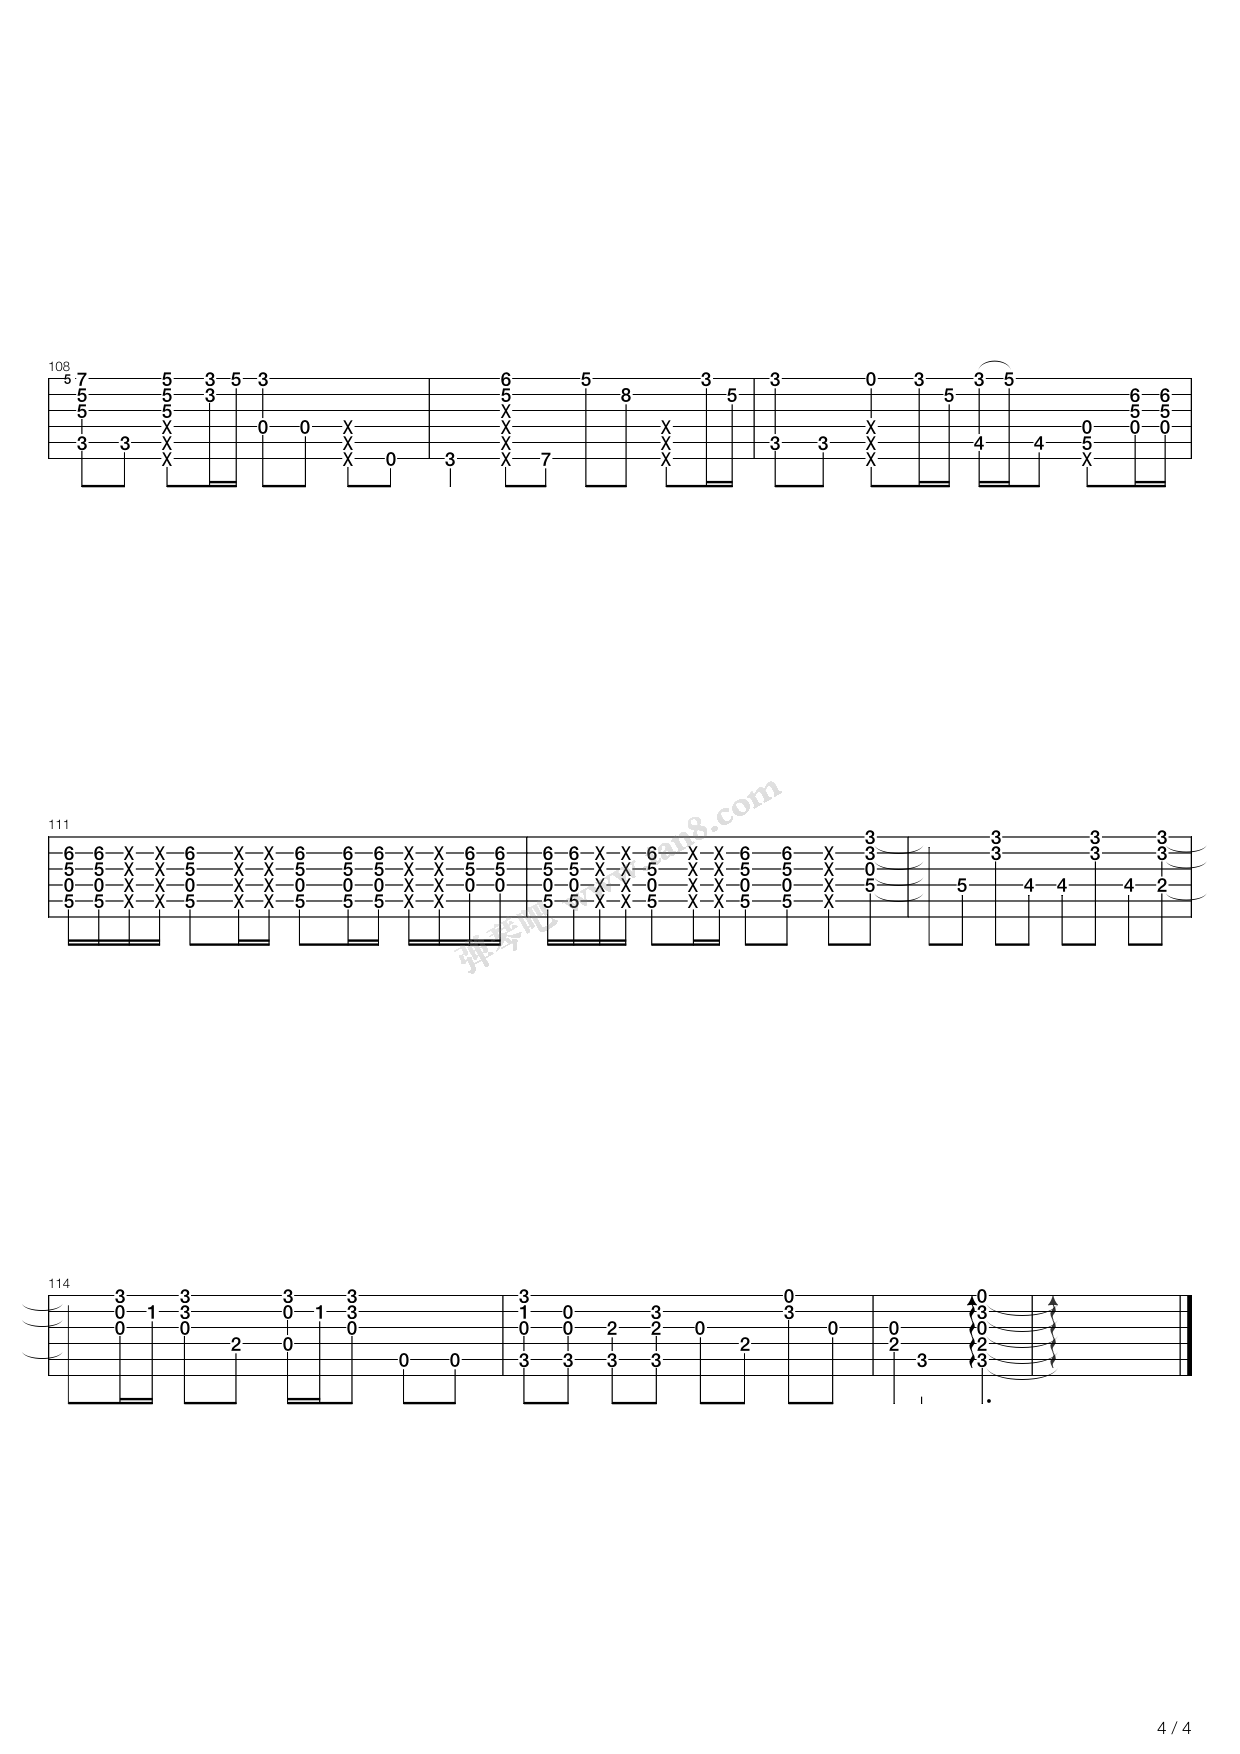 Man In The Mirror By Adam Rafferty Solo Guitar Tabs Chords Sheet Music Free Learnguitarsonline Com